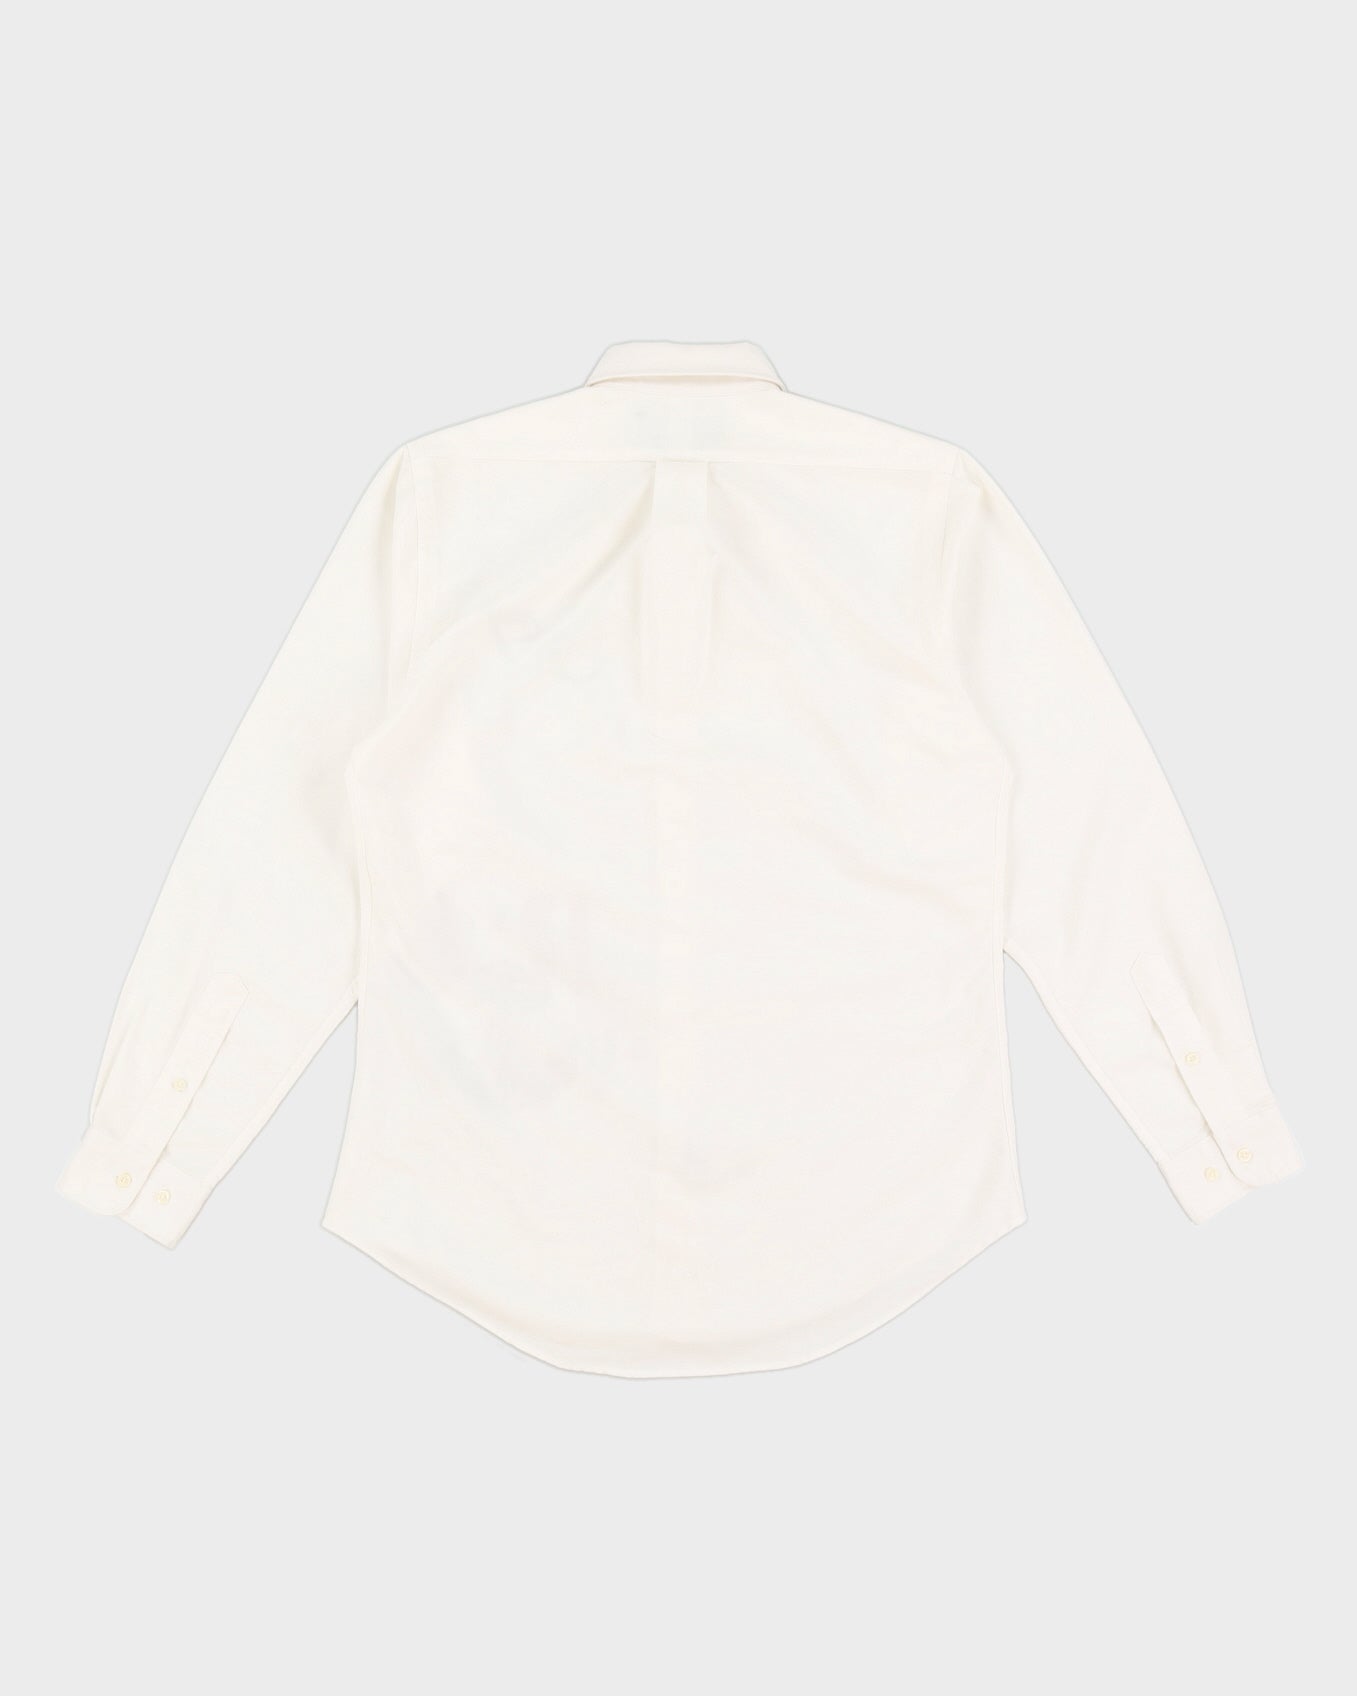 00s White Ralph Lauren Graphic Shirt - L